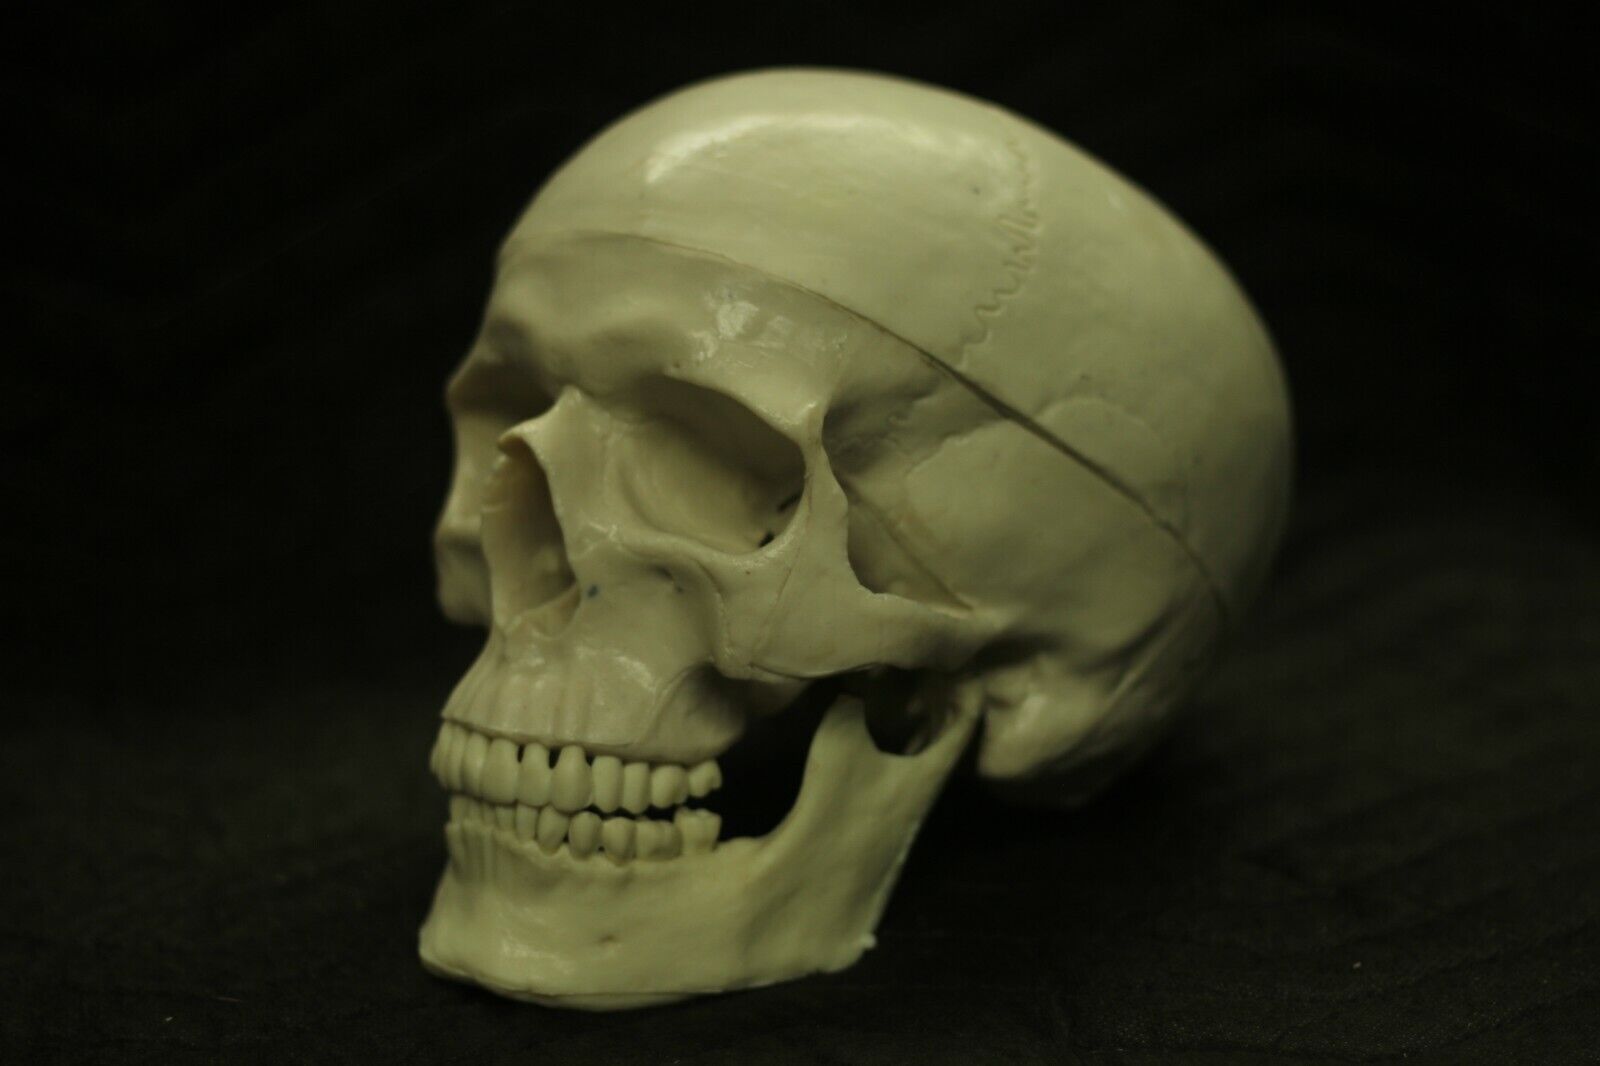  Human Skull replica 3pc Halloween Prop PVC plastic